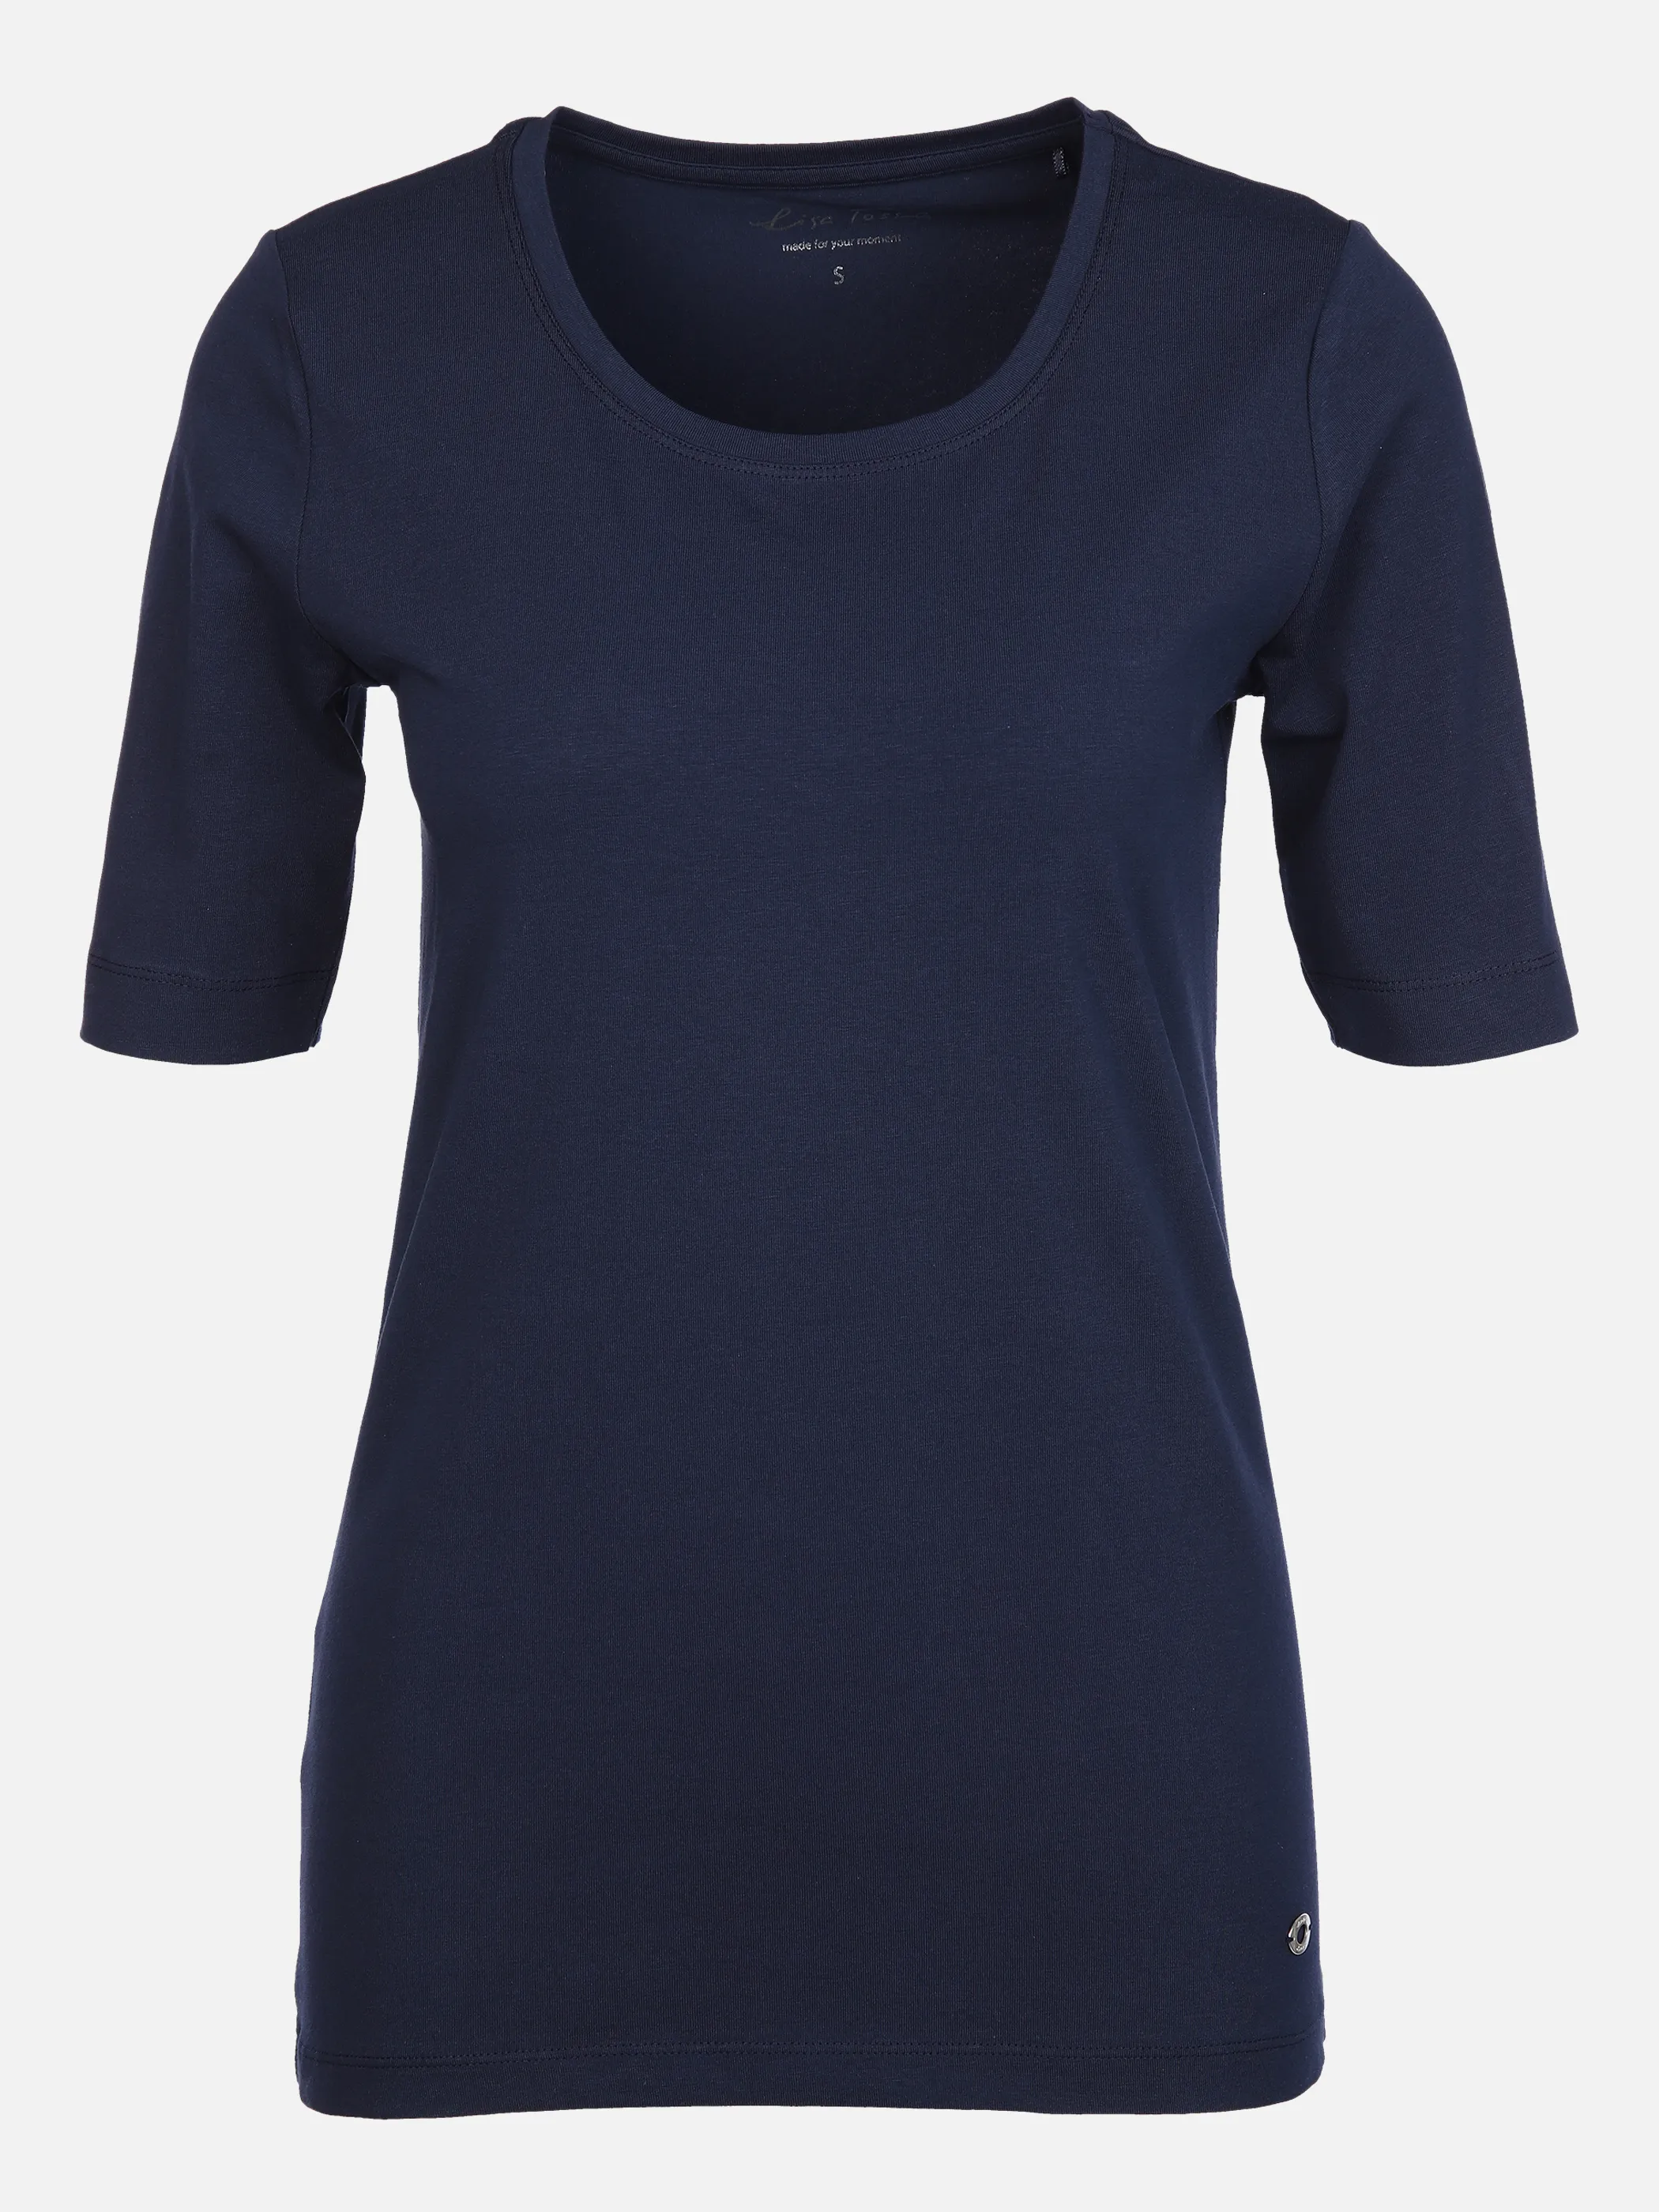 Lisa Tossa Da-Basic-T-Shirt m. Rundhals Blau 851521 MARINE 1